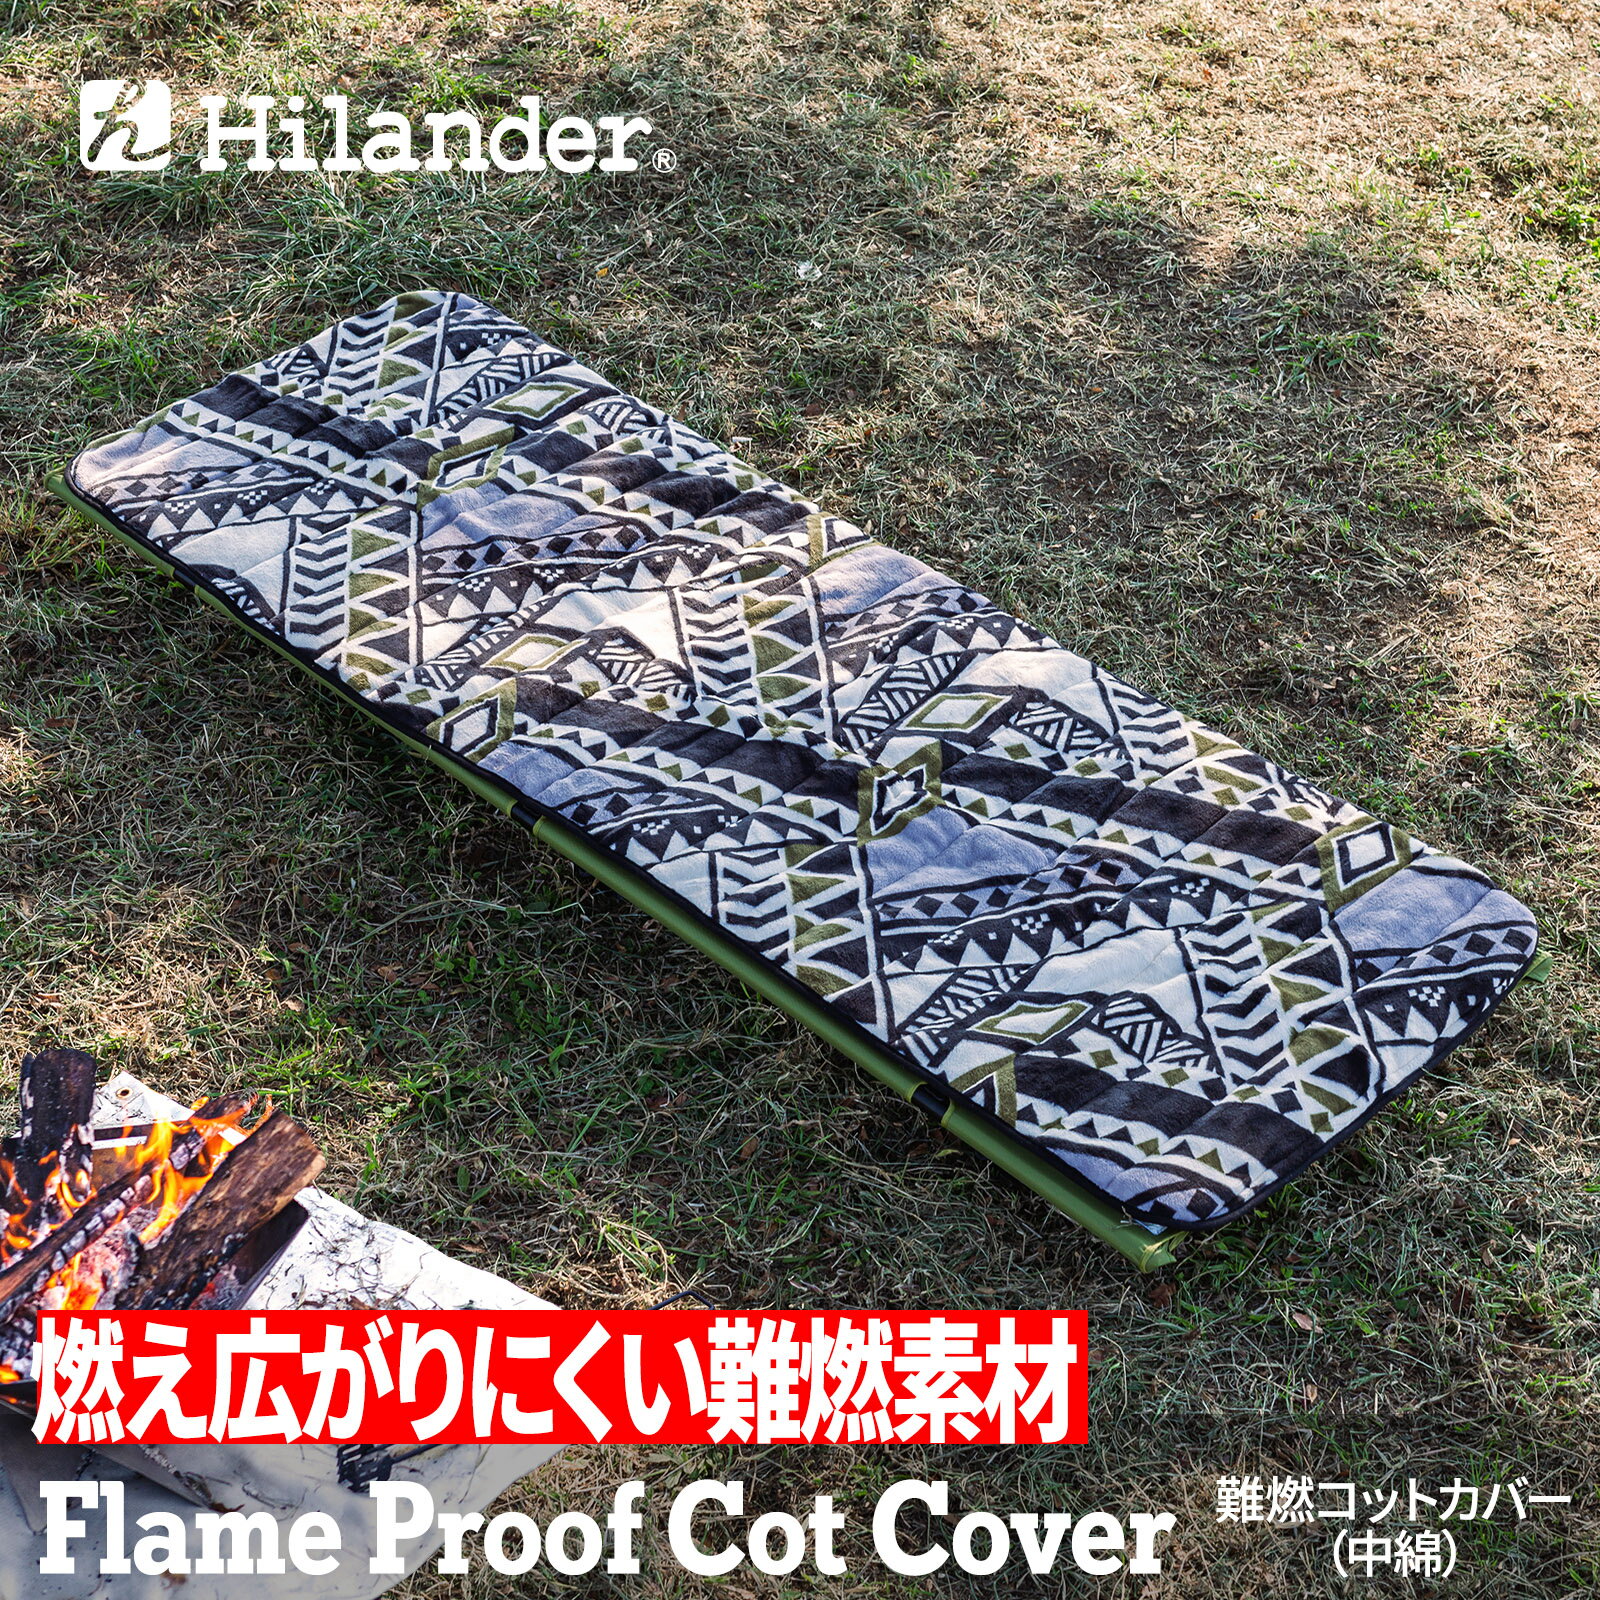 Hilander(ハイランダー) 難燃マット コットカバー 【1年保証】 トライバル N-086